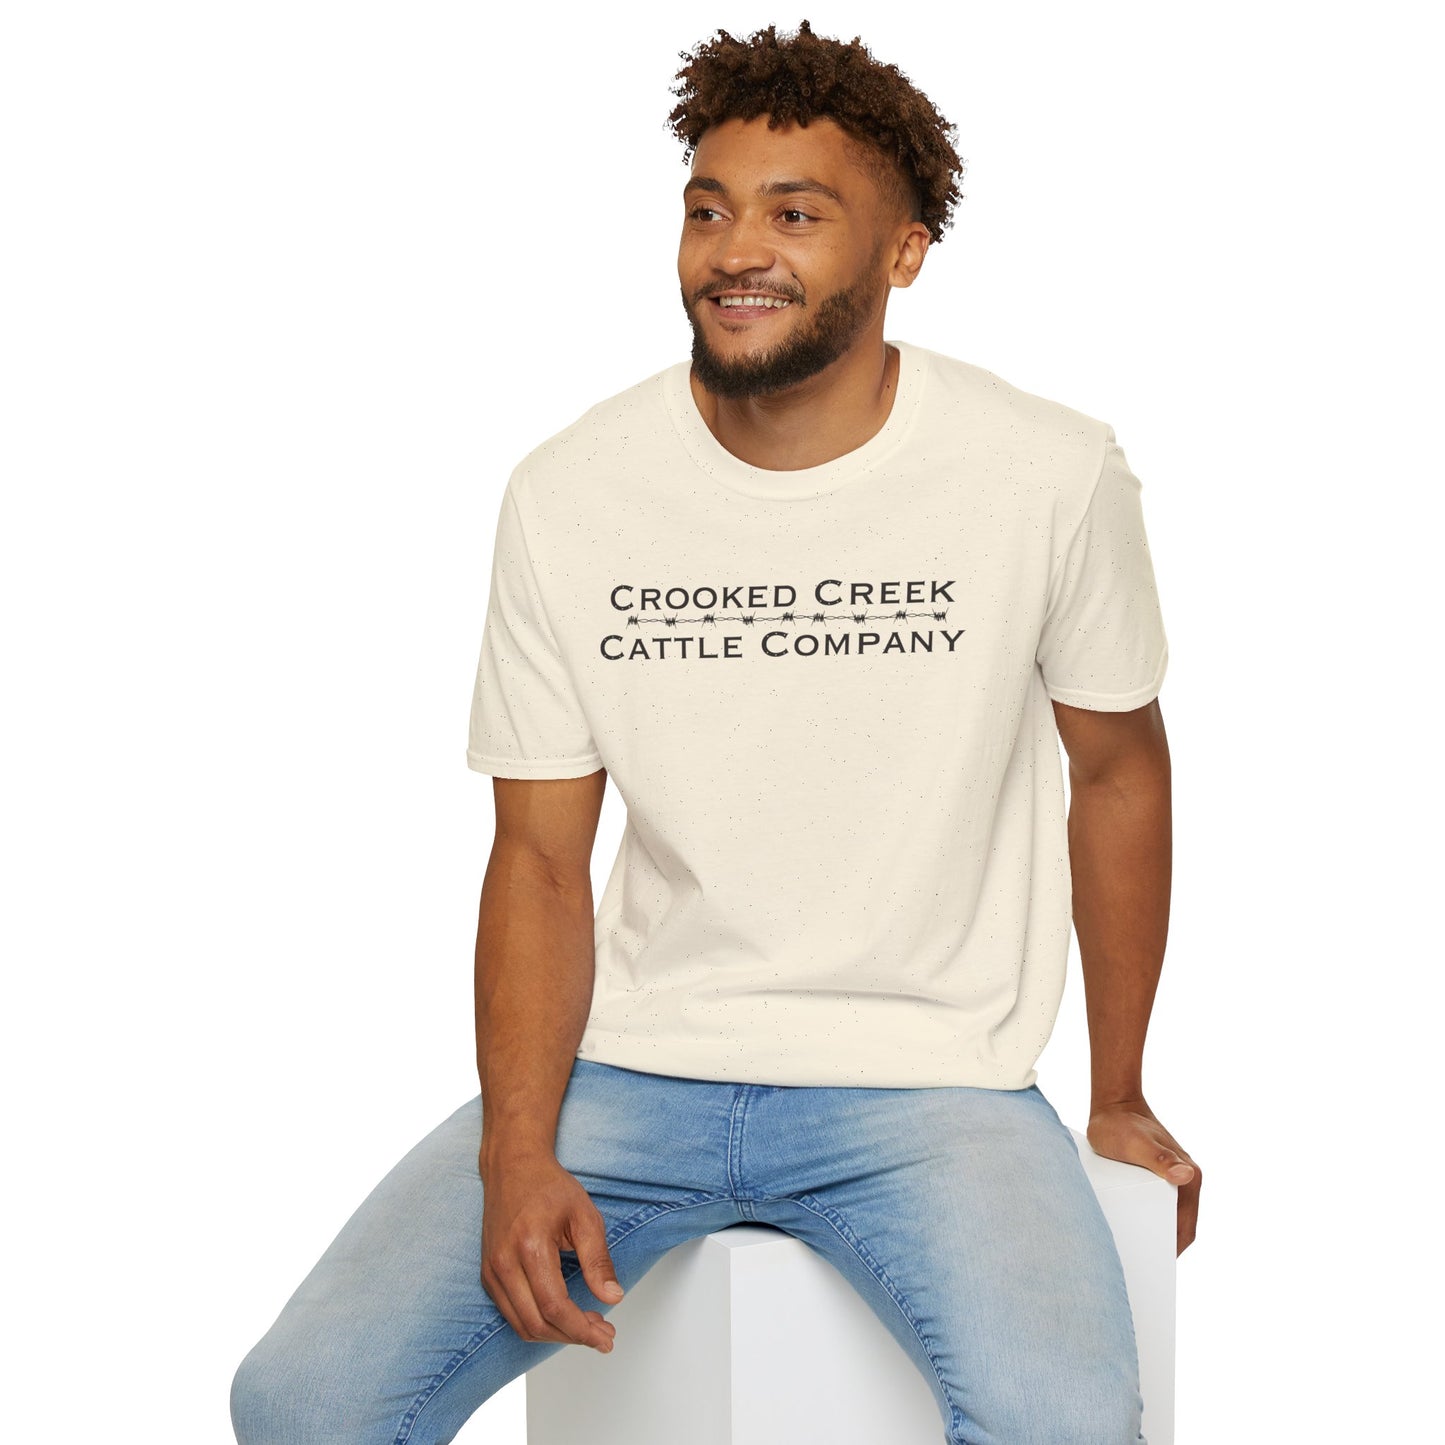 Classic Crooked Creek Cattle Company Shirt